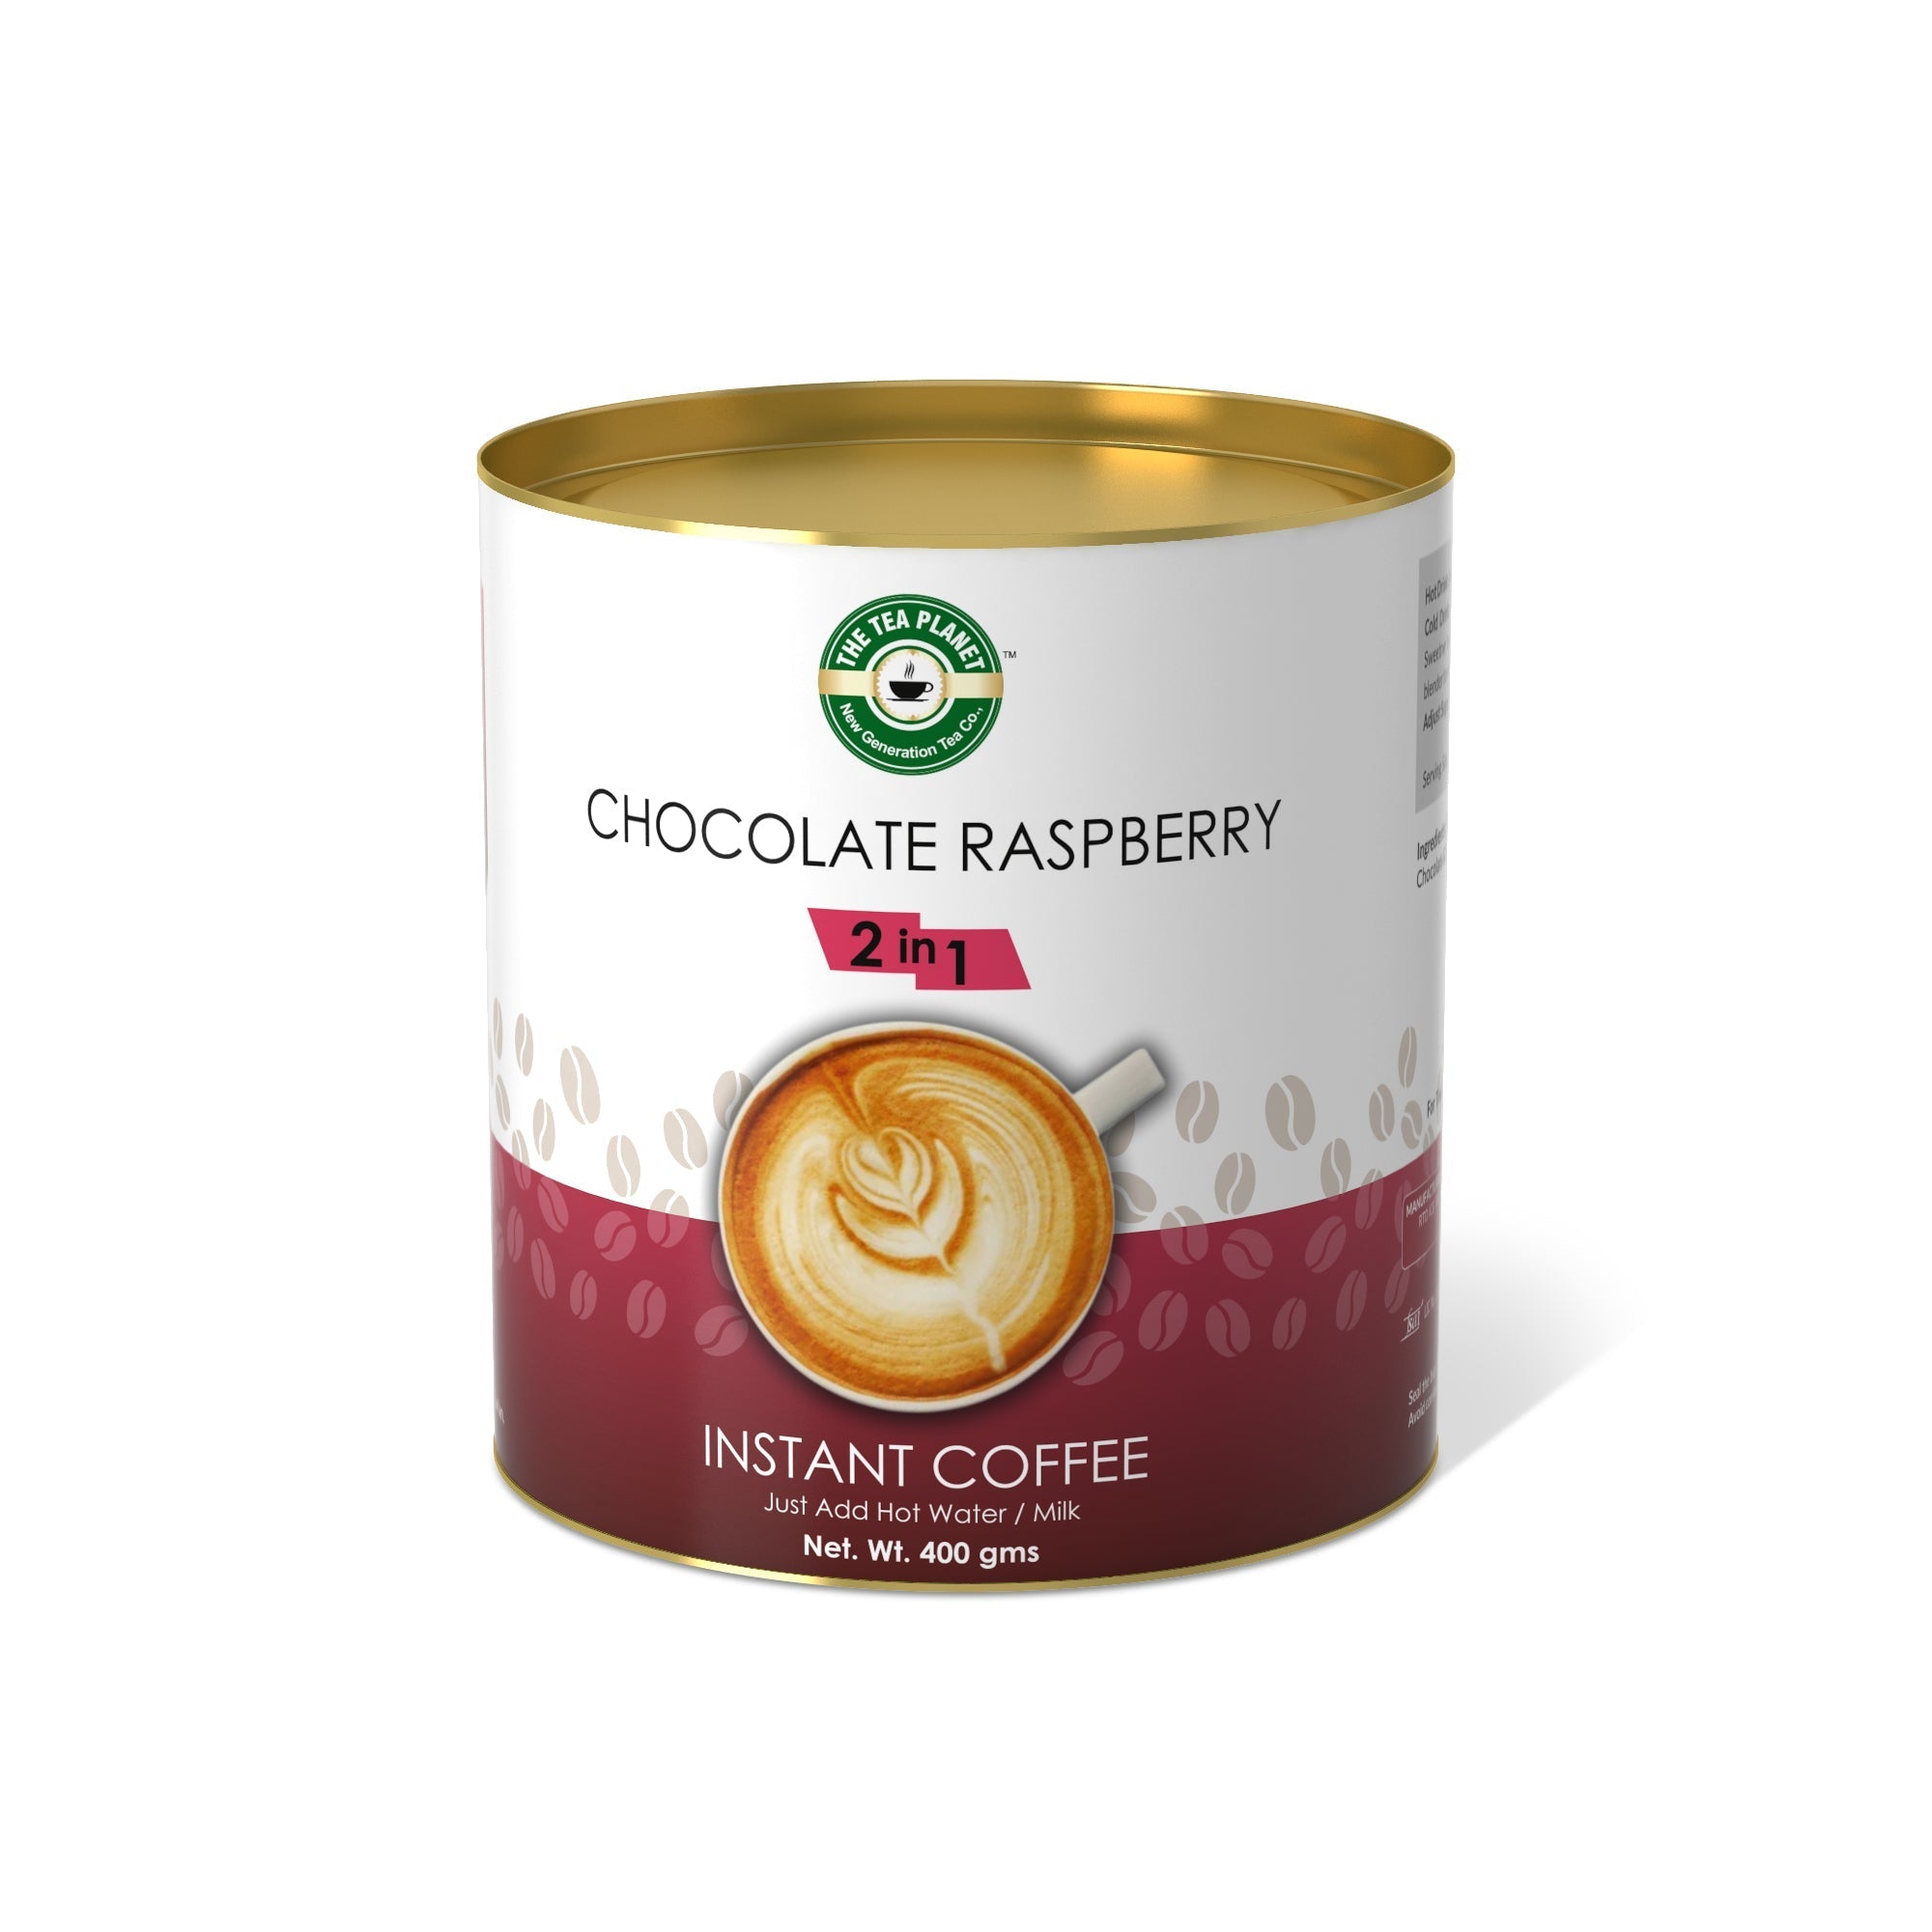 Chocolate Raspberry Instant Coffee Premix (2 in 1) - 400 gms